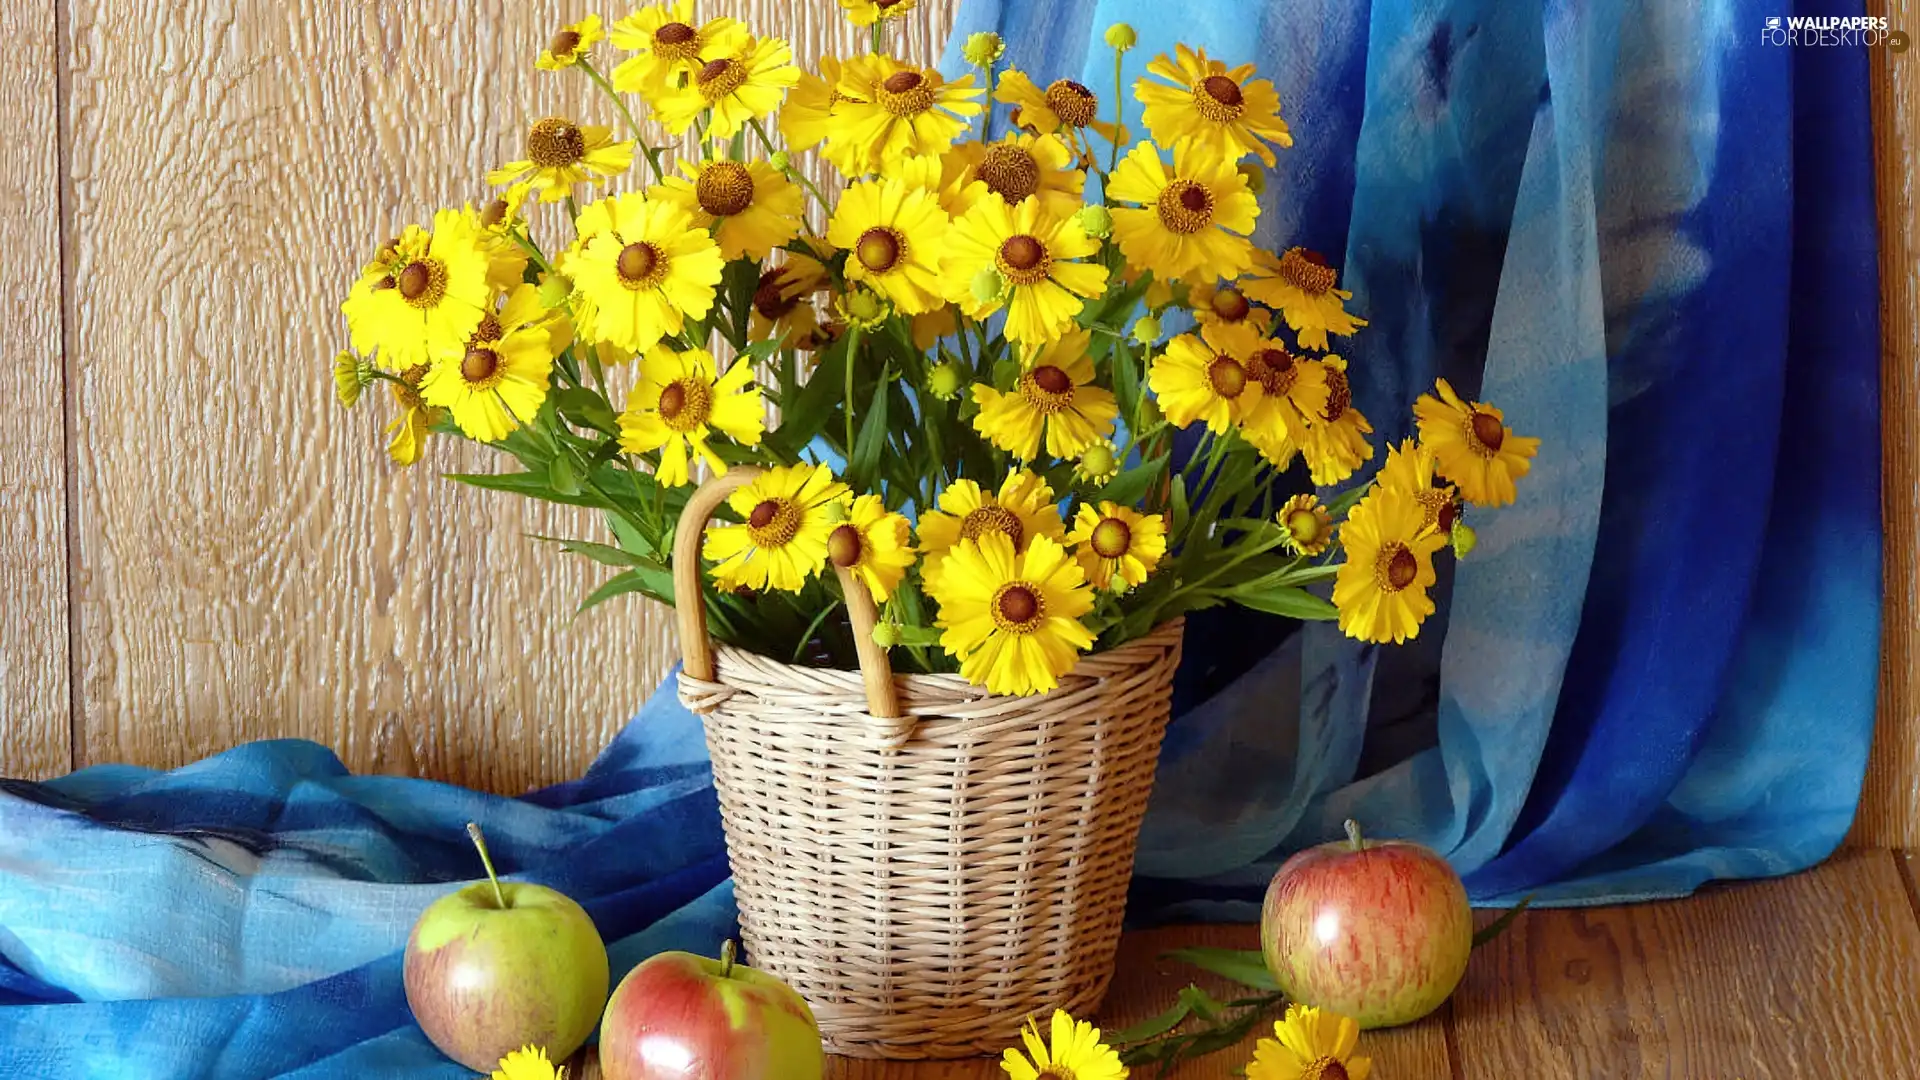 basket, Flowers, Blue, wicker, Yellow, apples, textile